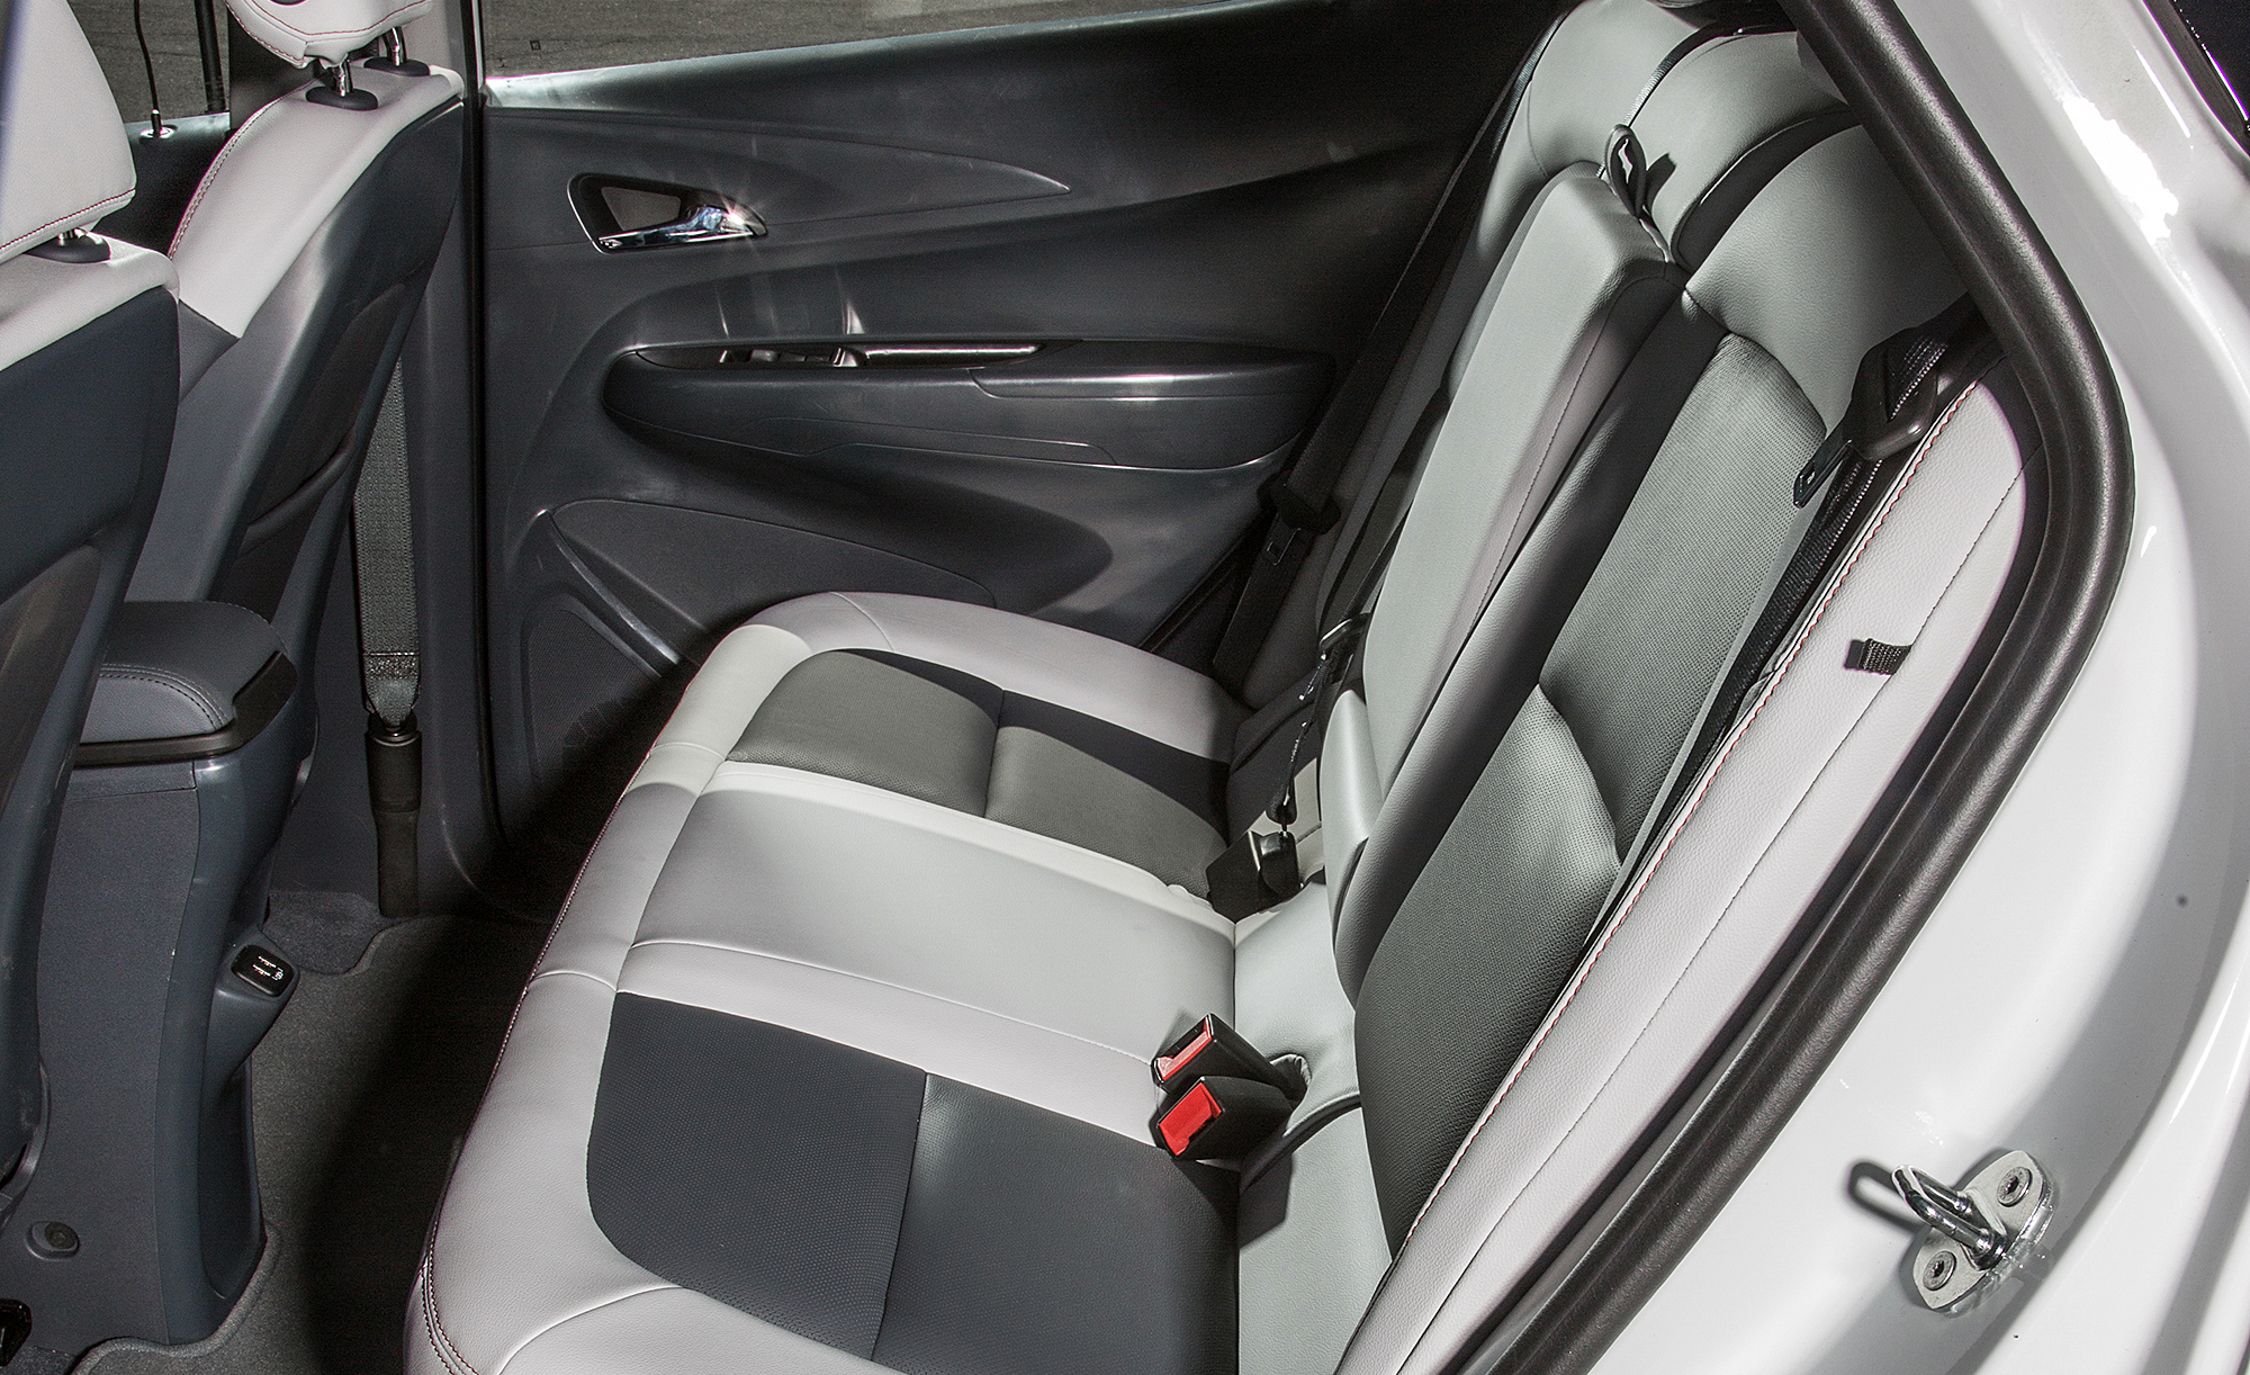 2017 Chevrolet Bolt Ev Interior Seats Rear (View 6 of 12)